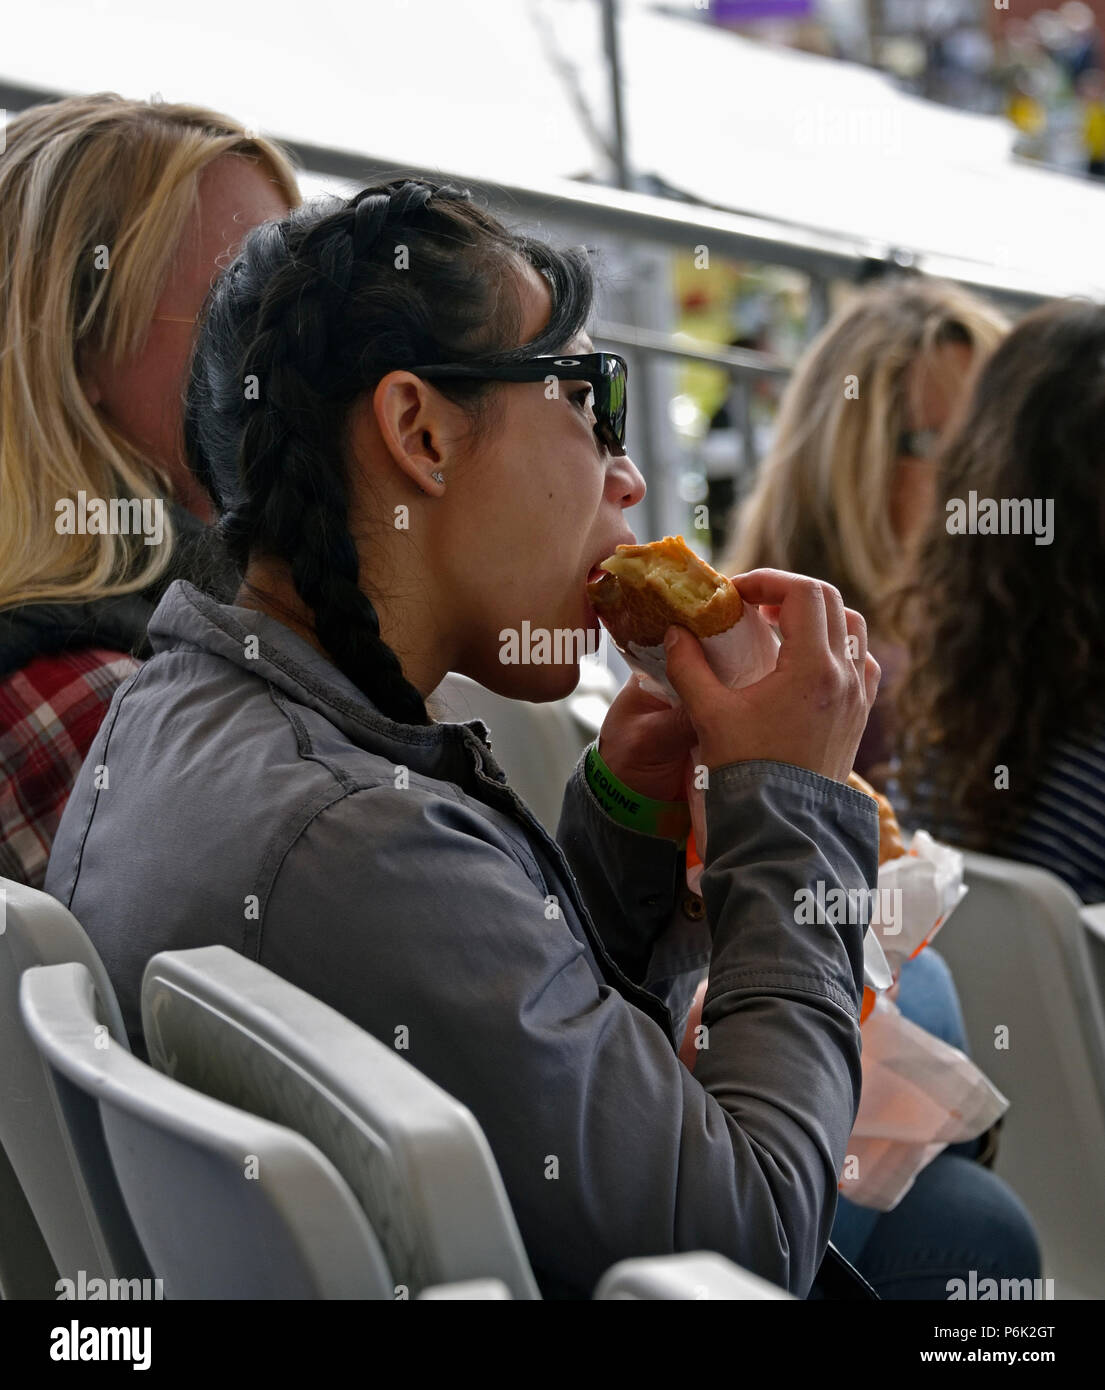 Woman spectator sitting in grandstand eating a pasty. Royal Highland Show 2018, Ingliston, Edinburgh, Scotland, United Kingdom, Europe. Stock Photo